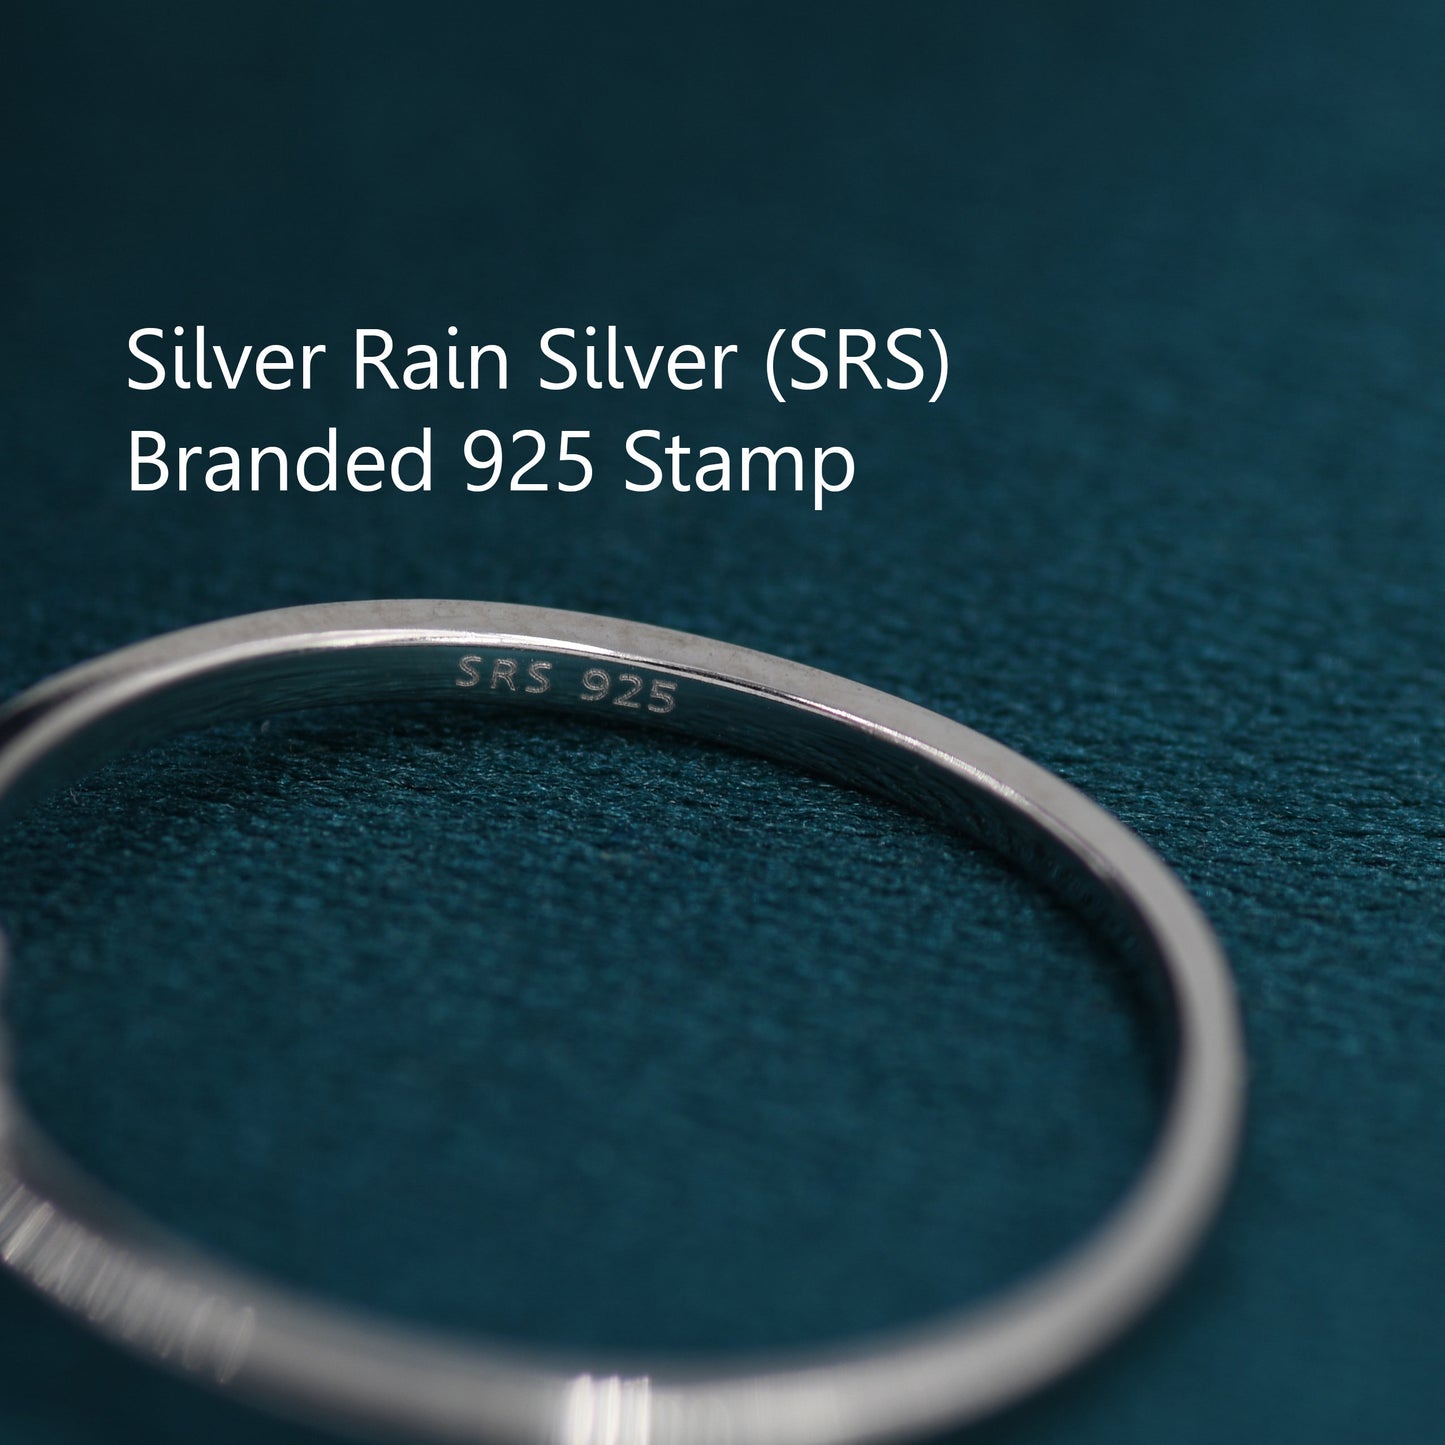 Minimalist Genuine Aquamarine Ring in Sterling Silver,  4mm Bezel Set Natural Aquamarine Ring, Adjustable Size, Aquamarine Ring